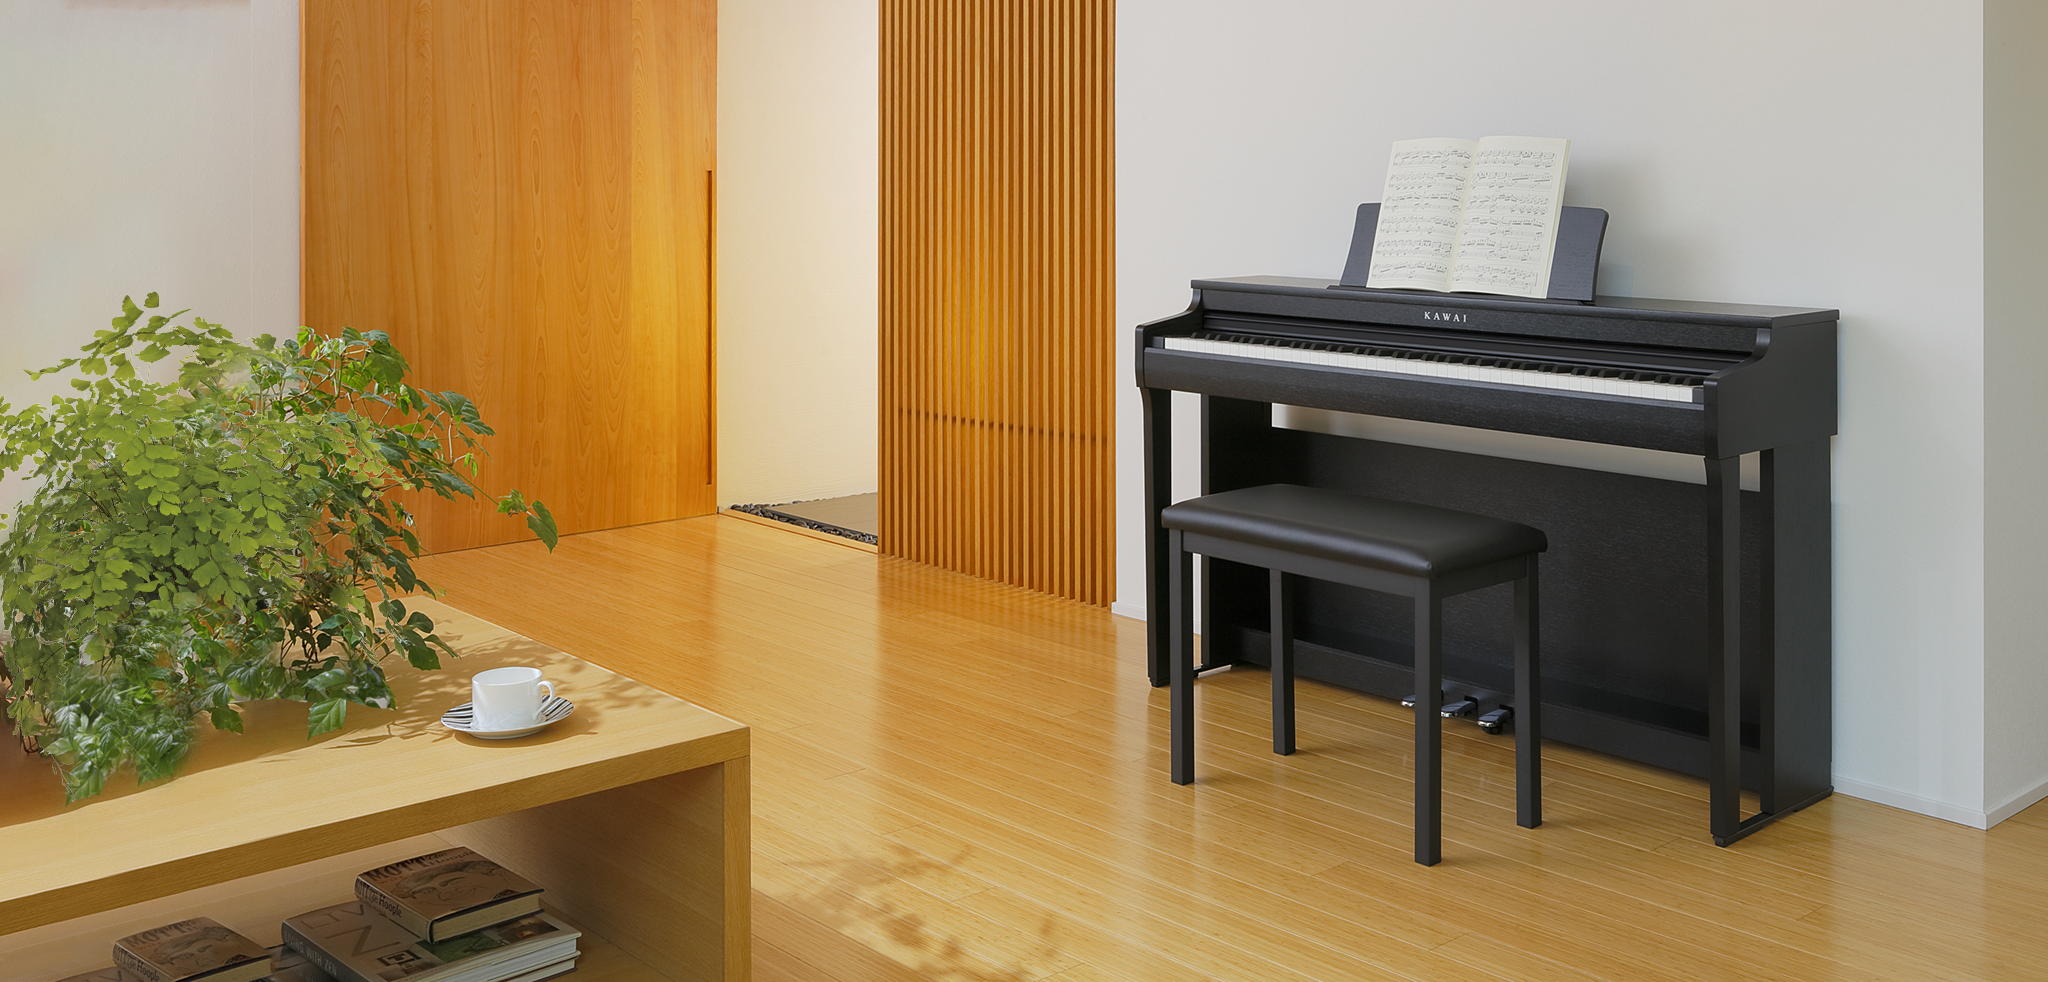 Kawai CN29｜Digital Pianos｜Products｜Kawai Musical Instruments Manufacturing  Co., Ltd.